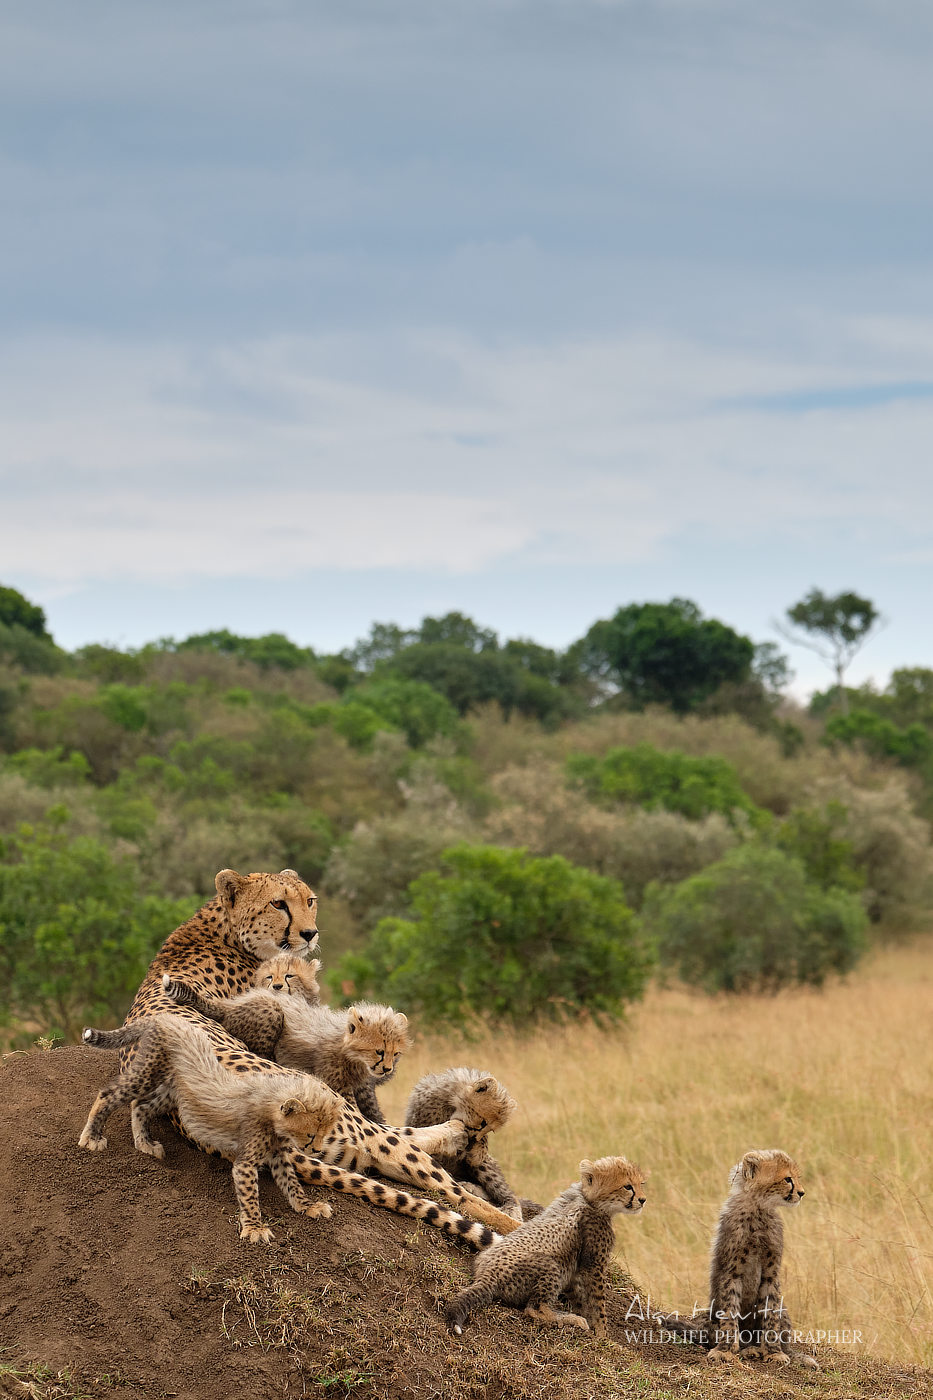 Cheetah & Cubs, Masai Mara Graduated filters and wildlife photography